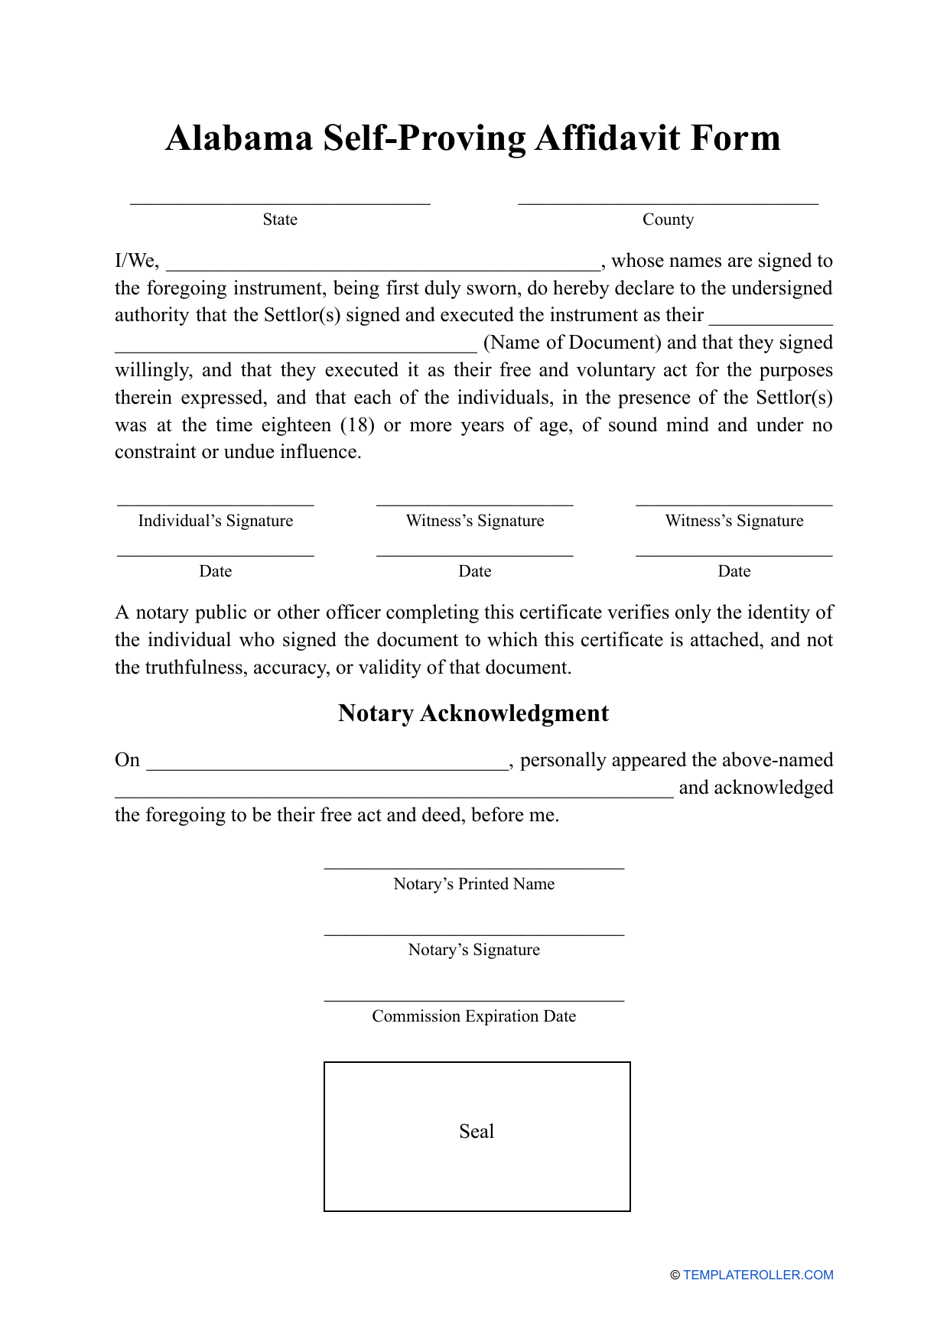 Self-proving Affidavit Form - Alabama, Page 1